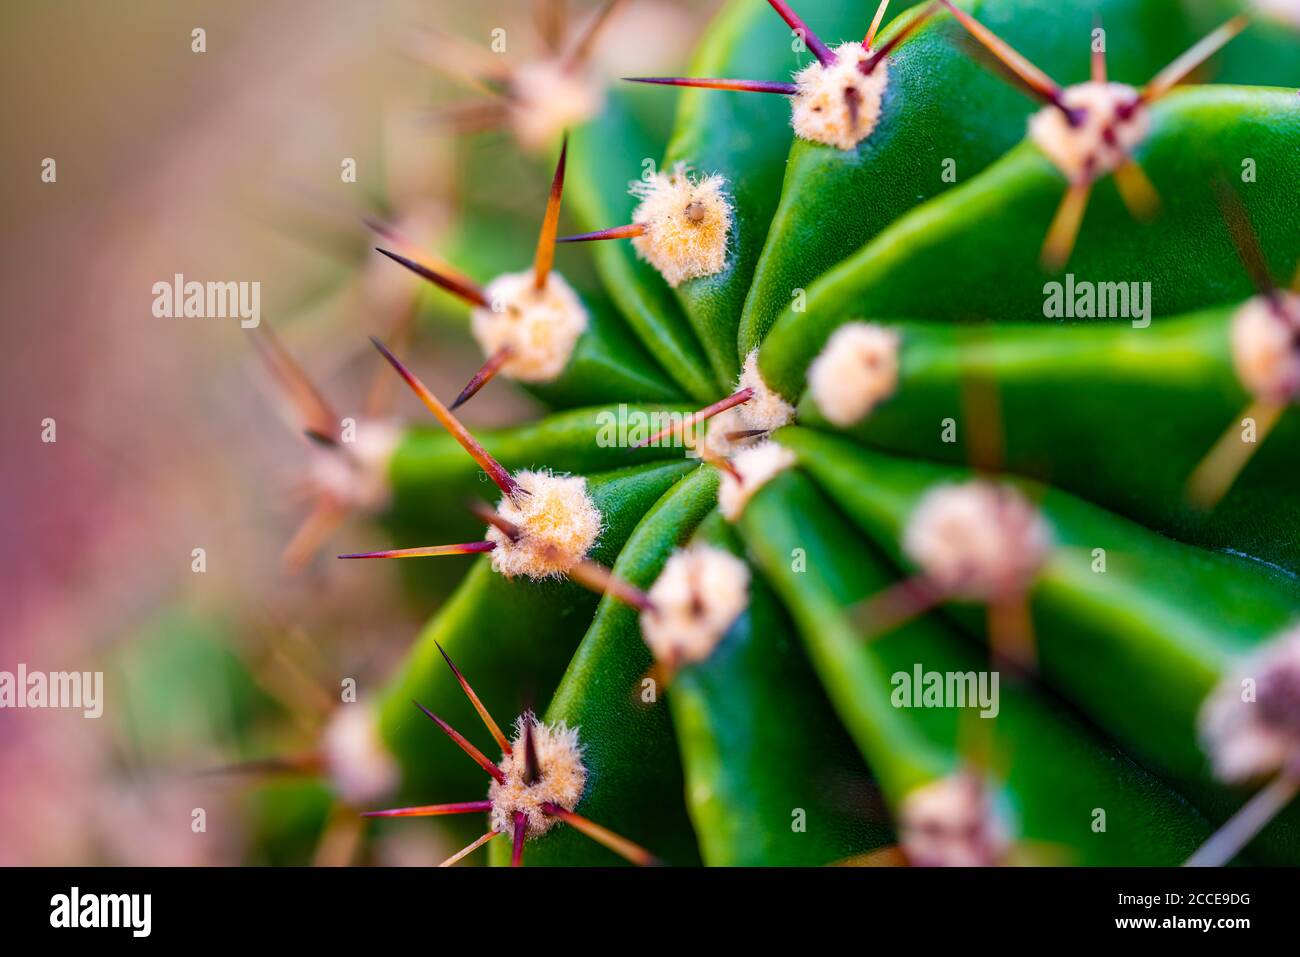 Close Up, Nature, Garden, Growth, abstract, cactus Stock Photo